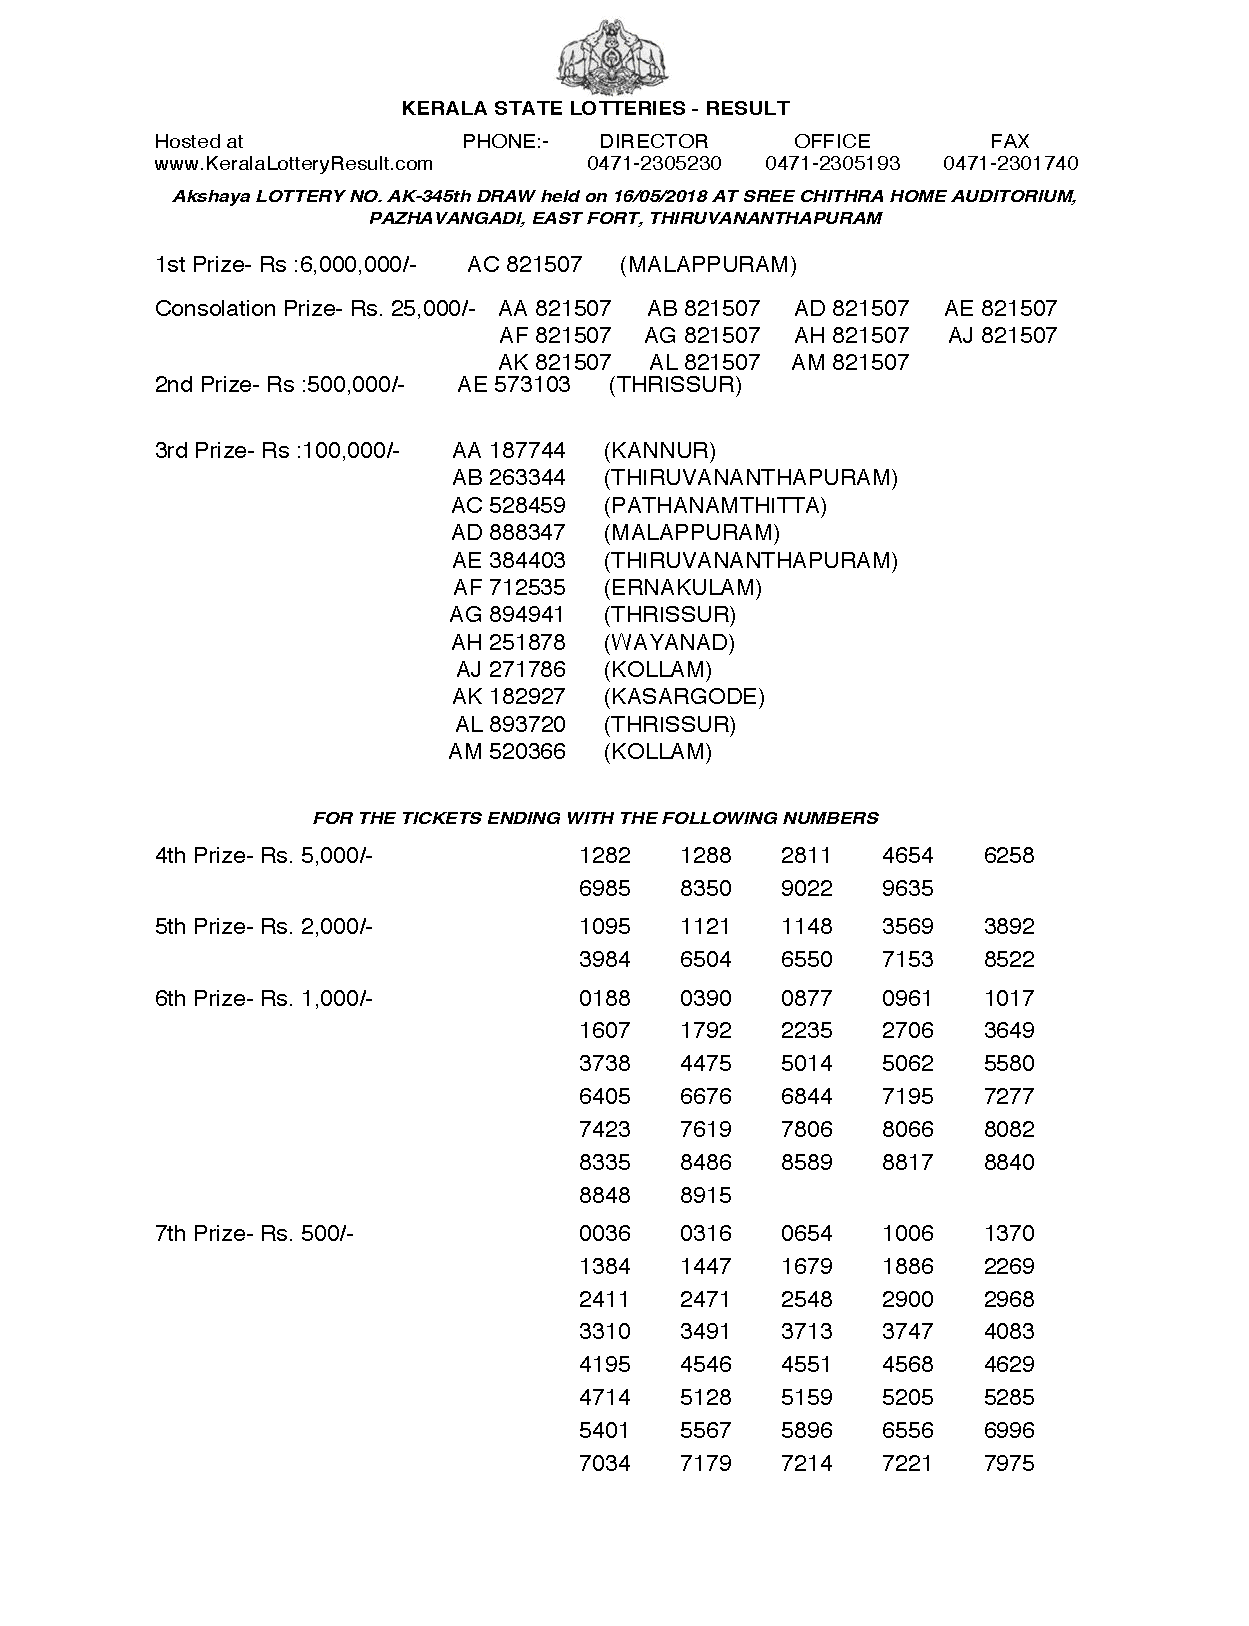 Akshaya AK345 Kerala Lottery Results Screenshot: Page 1